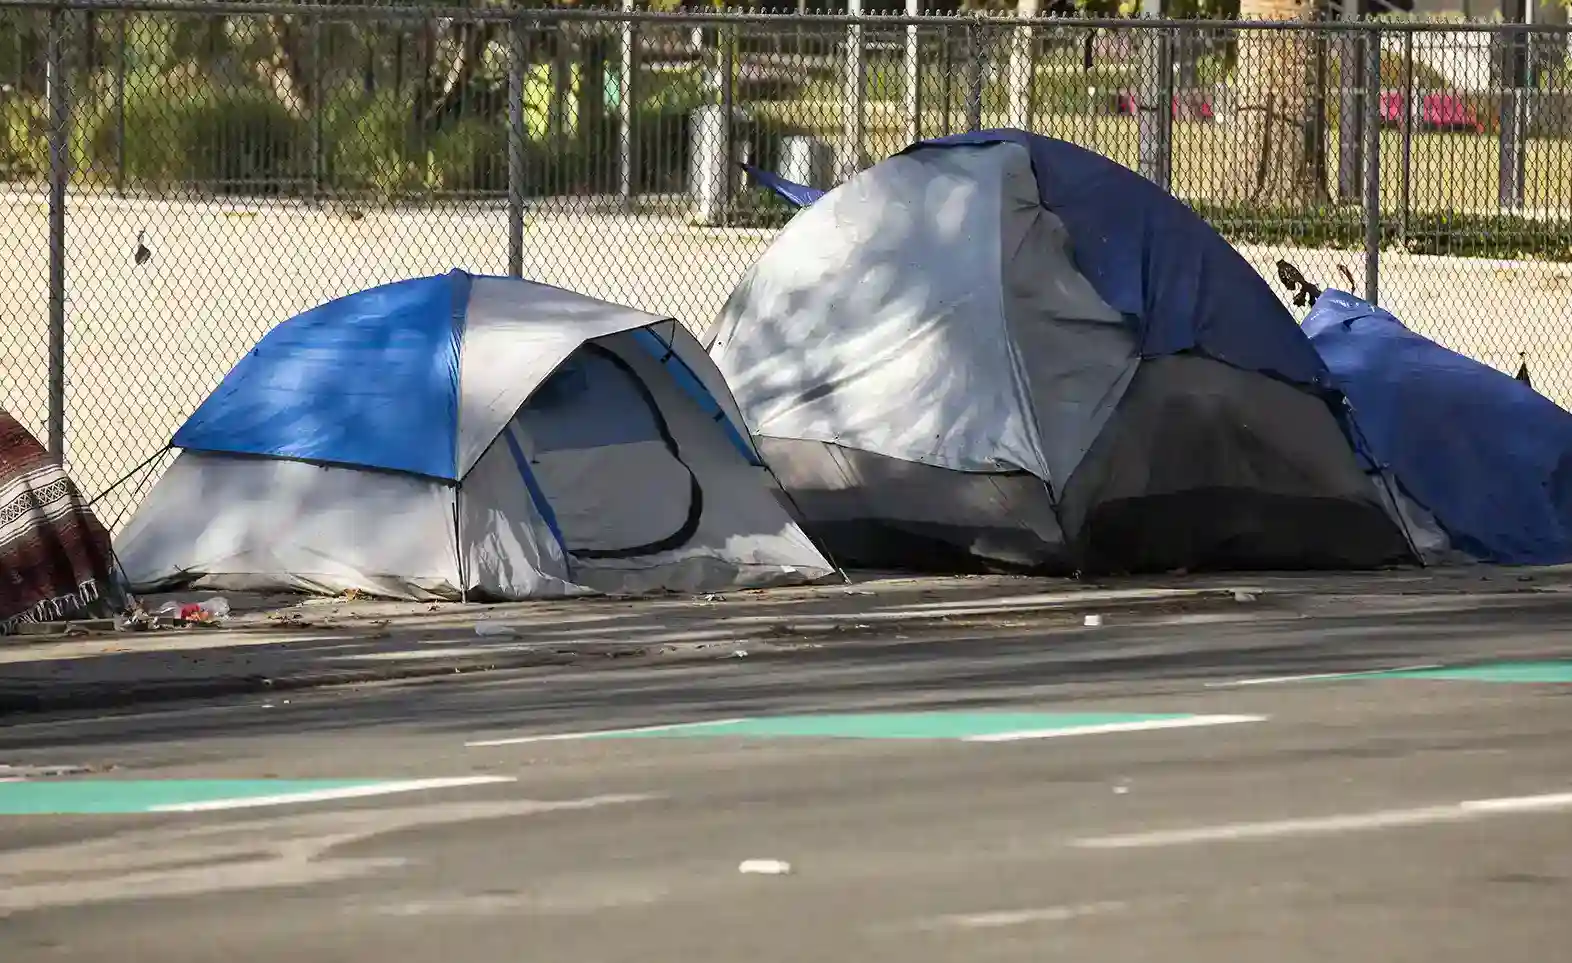 Tents on sidewalk inferring homelessness